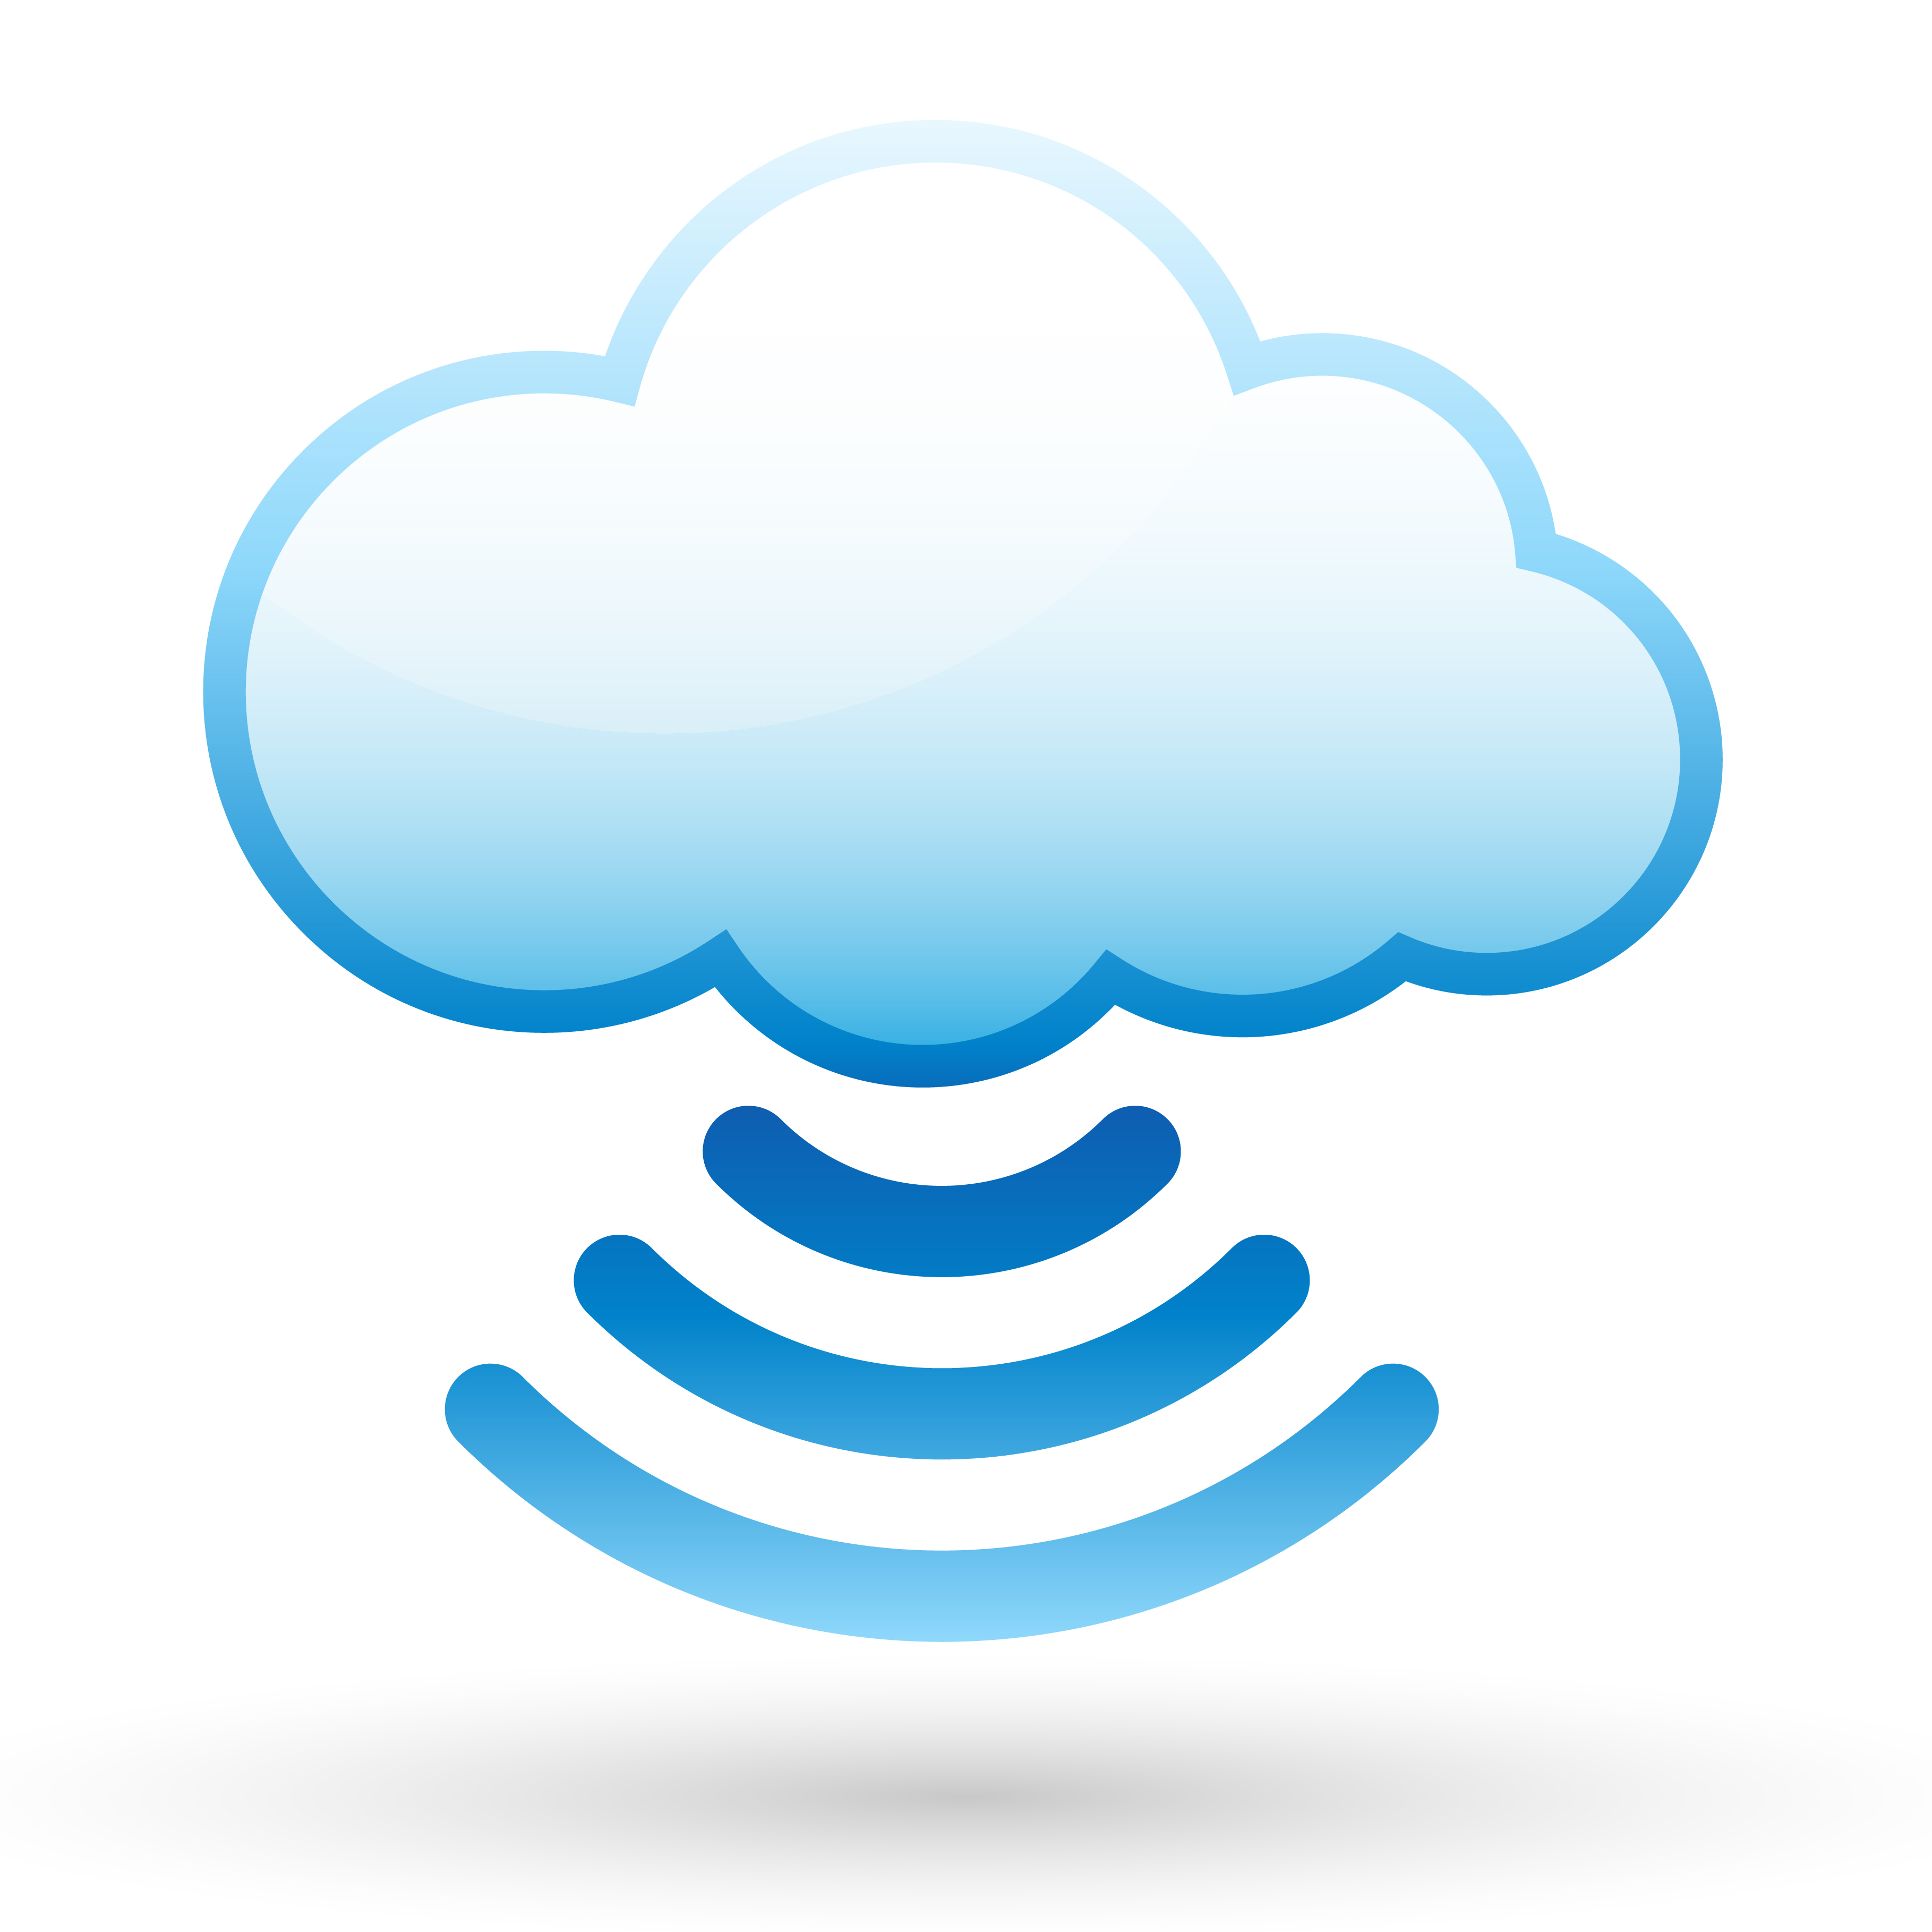 7 Internet Cloud Icon Images